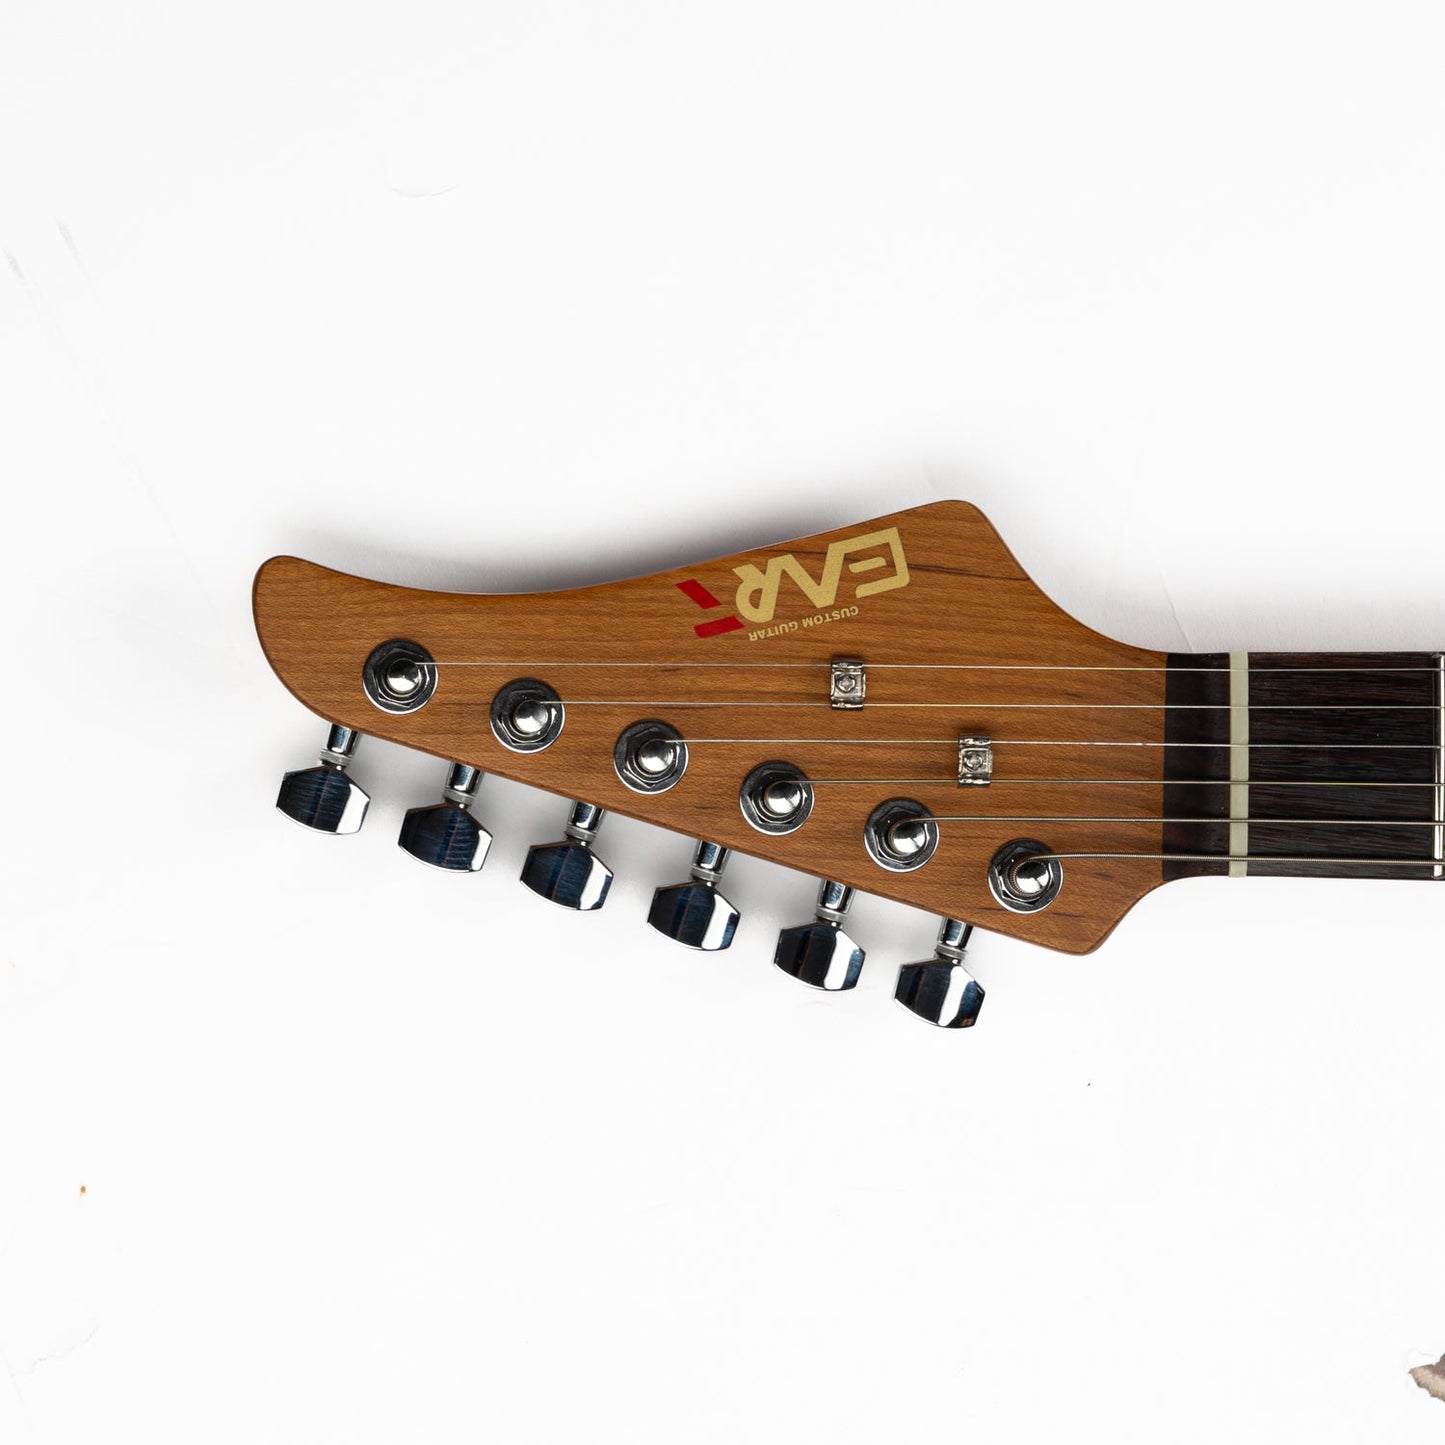 EART Guitars, DMX-9HLA, Handmade Lacquer Art Full Solid  Electric Guitar